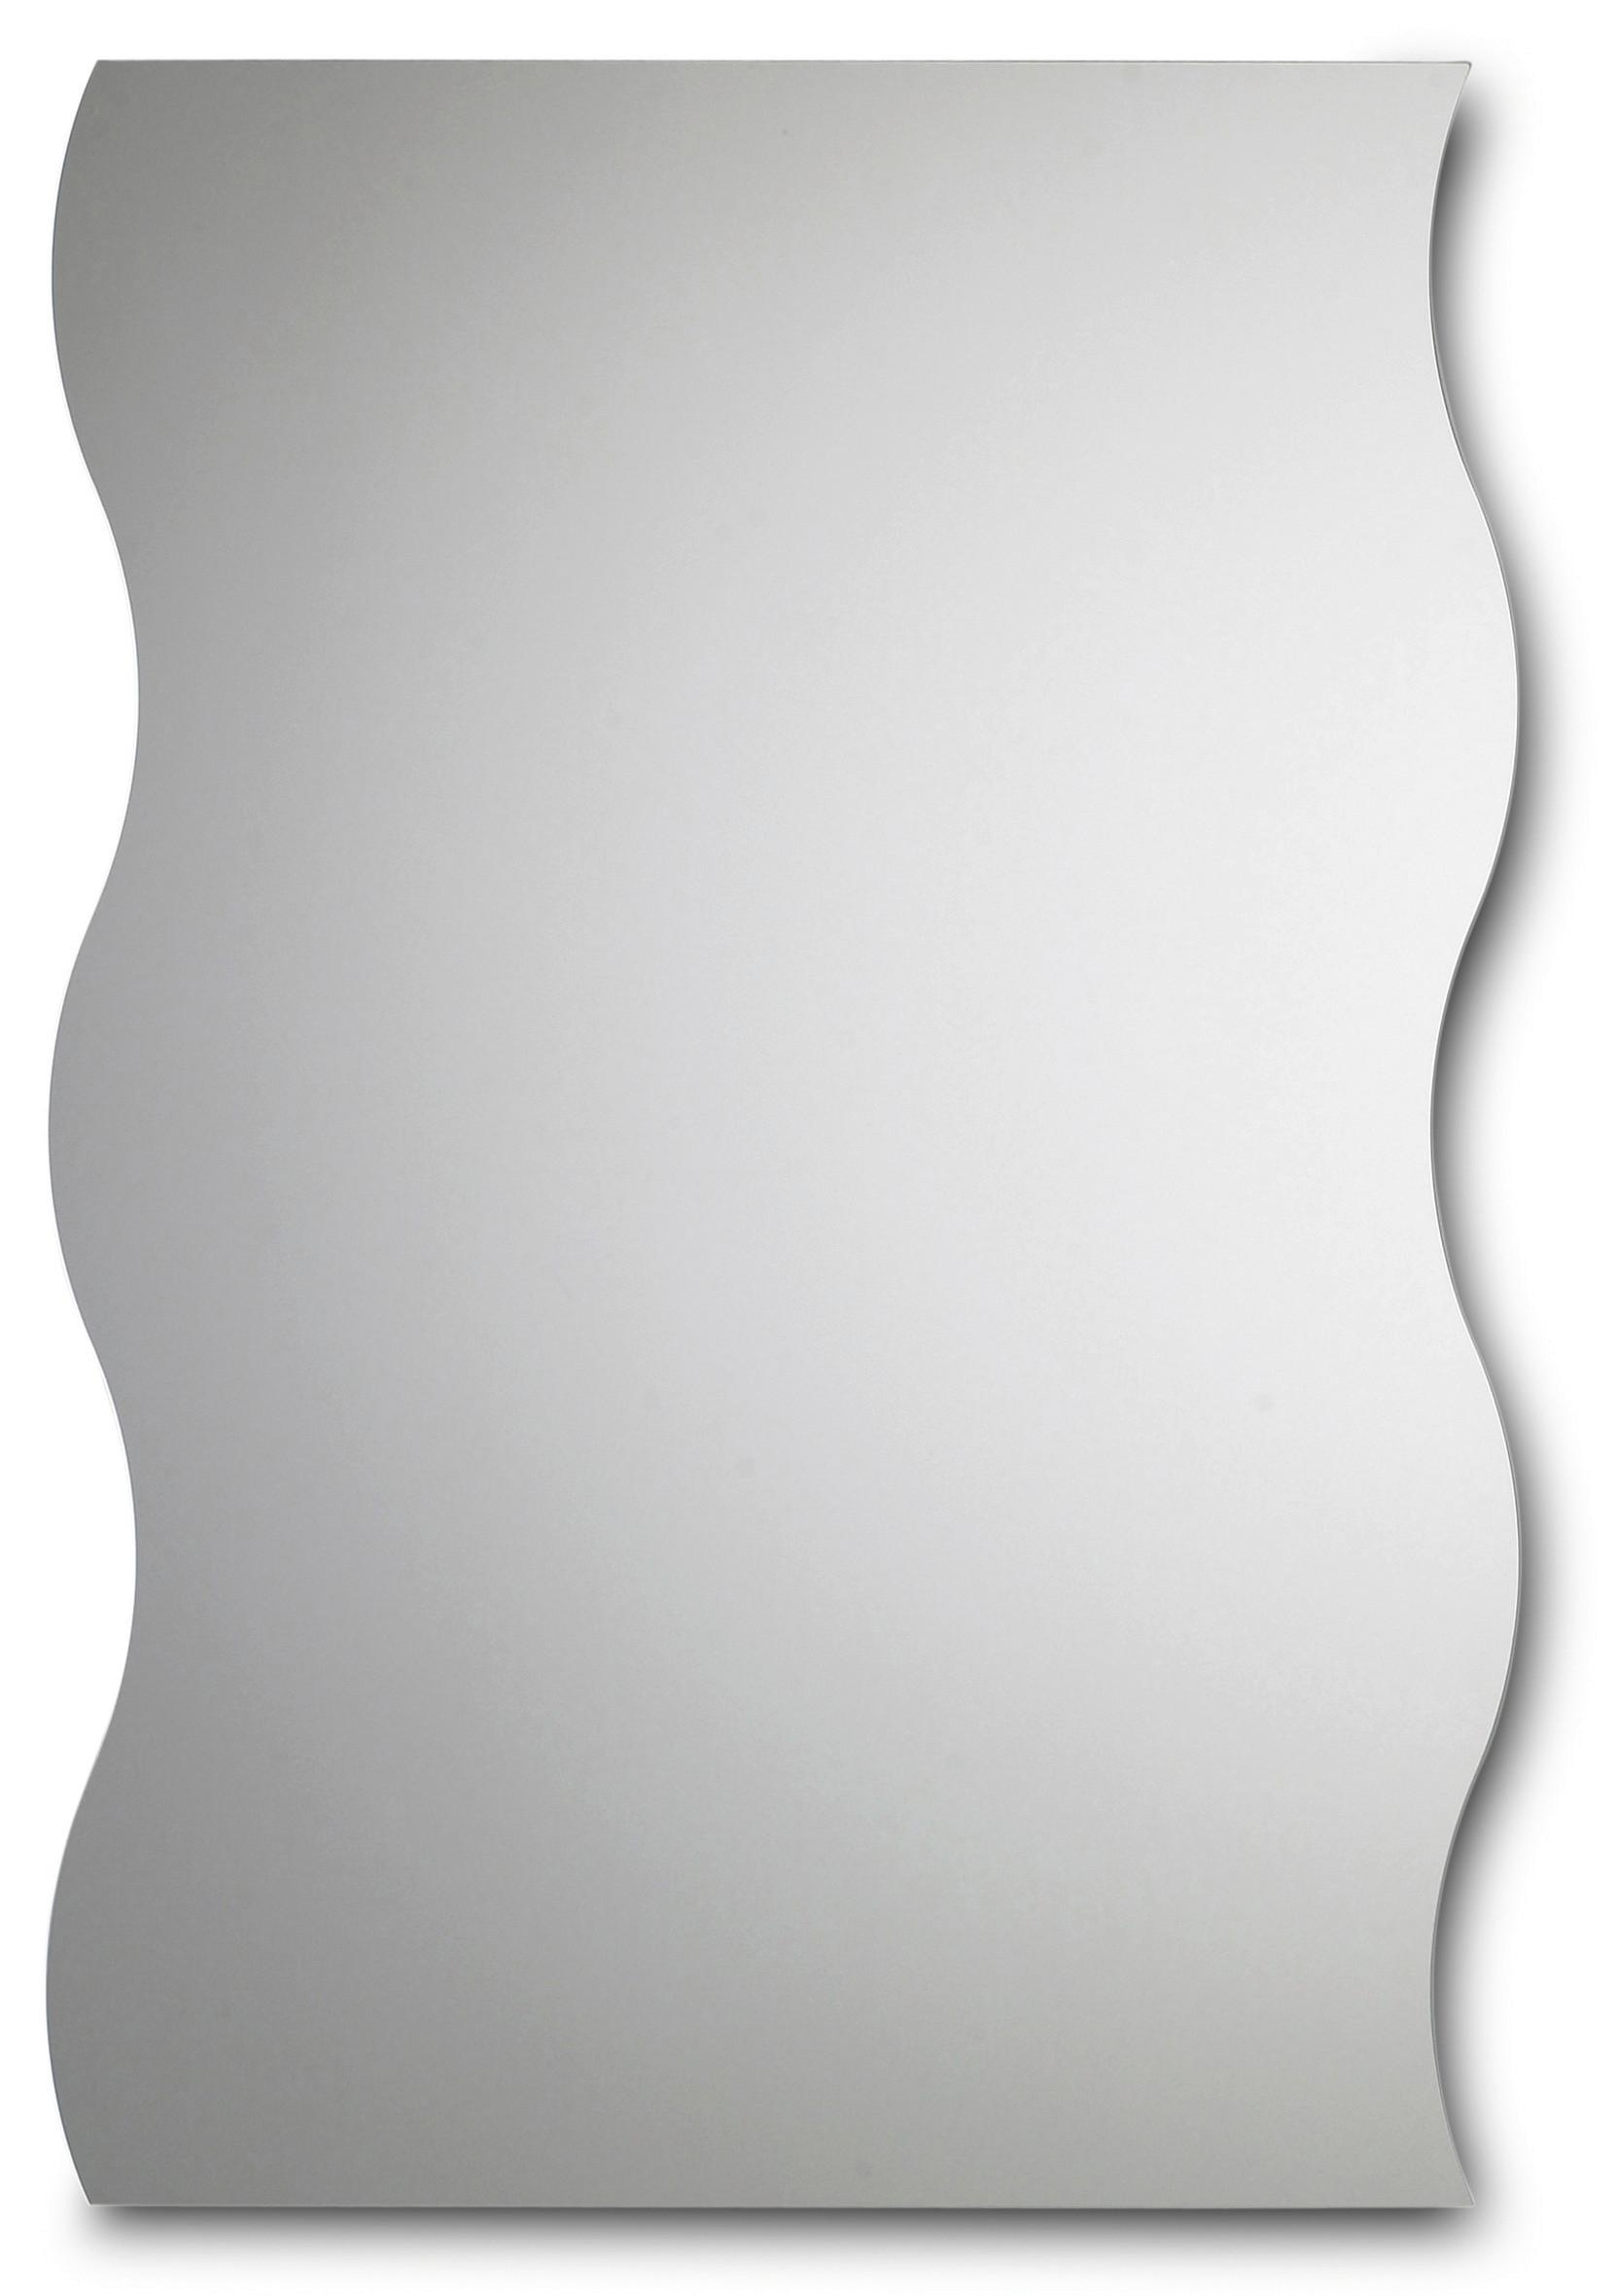 Wandspiegel Bonny Wellenform 50x70 cm - MODERN, Glas (50/70cm) - Ondega